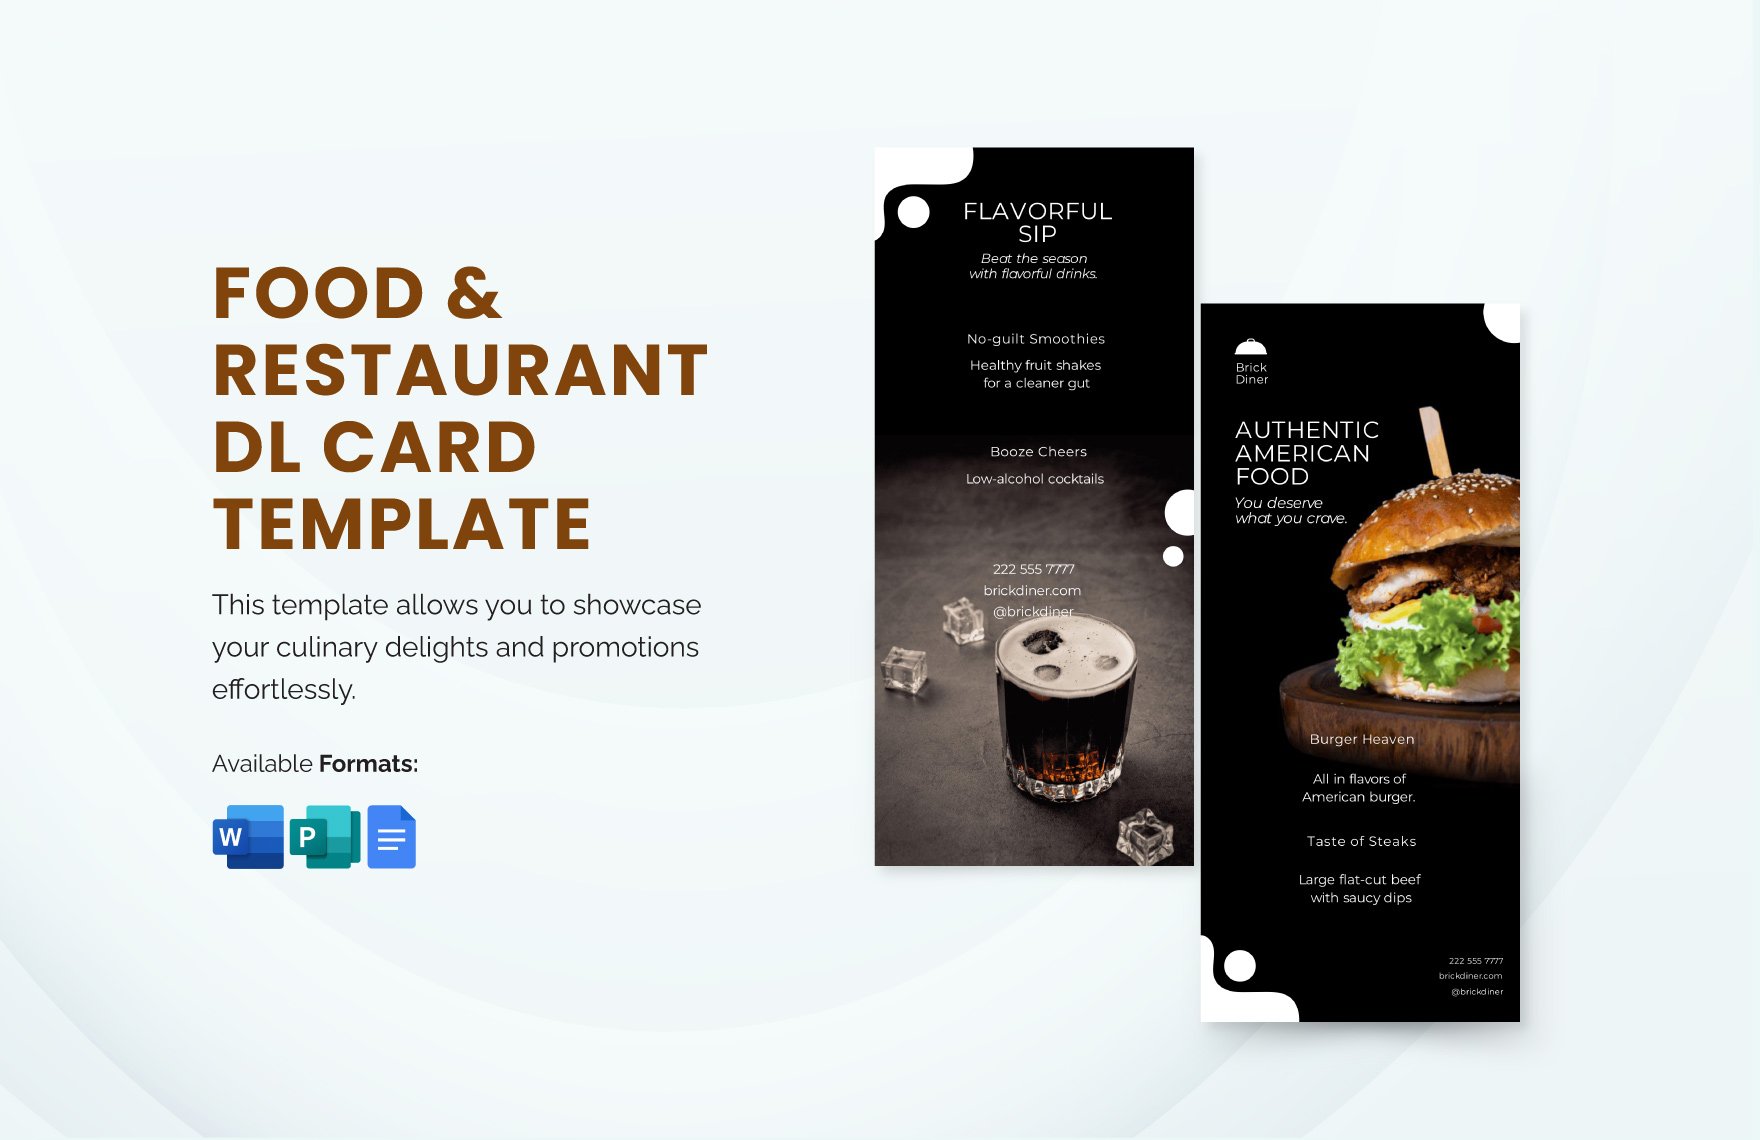 Food & Restaurant DL Card Template